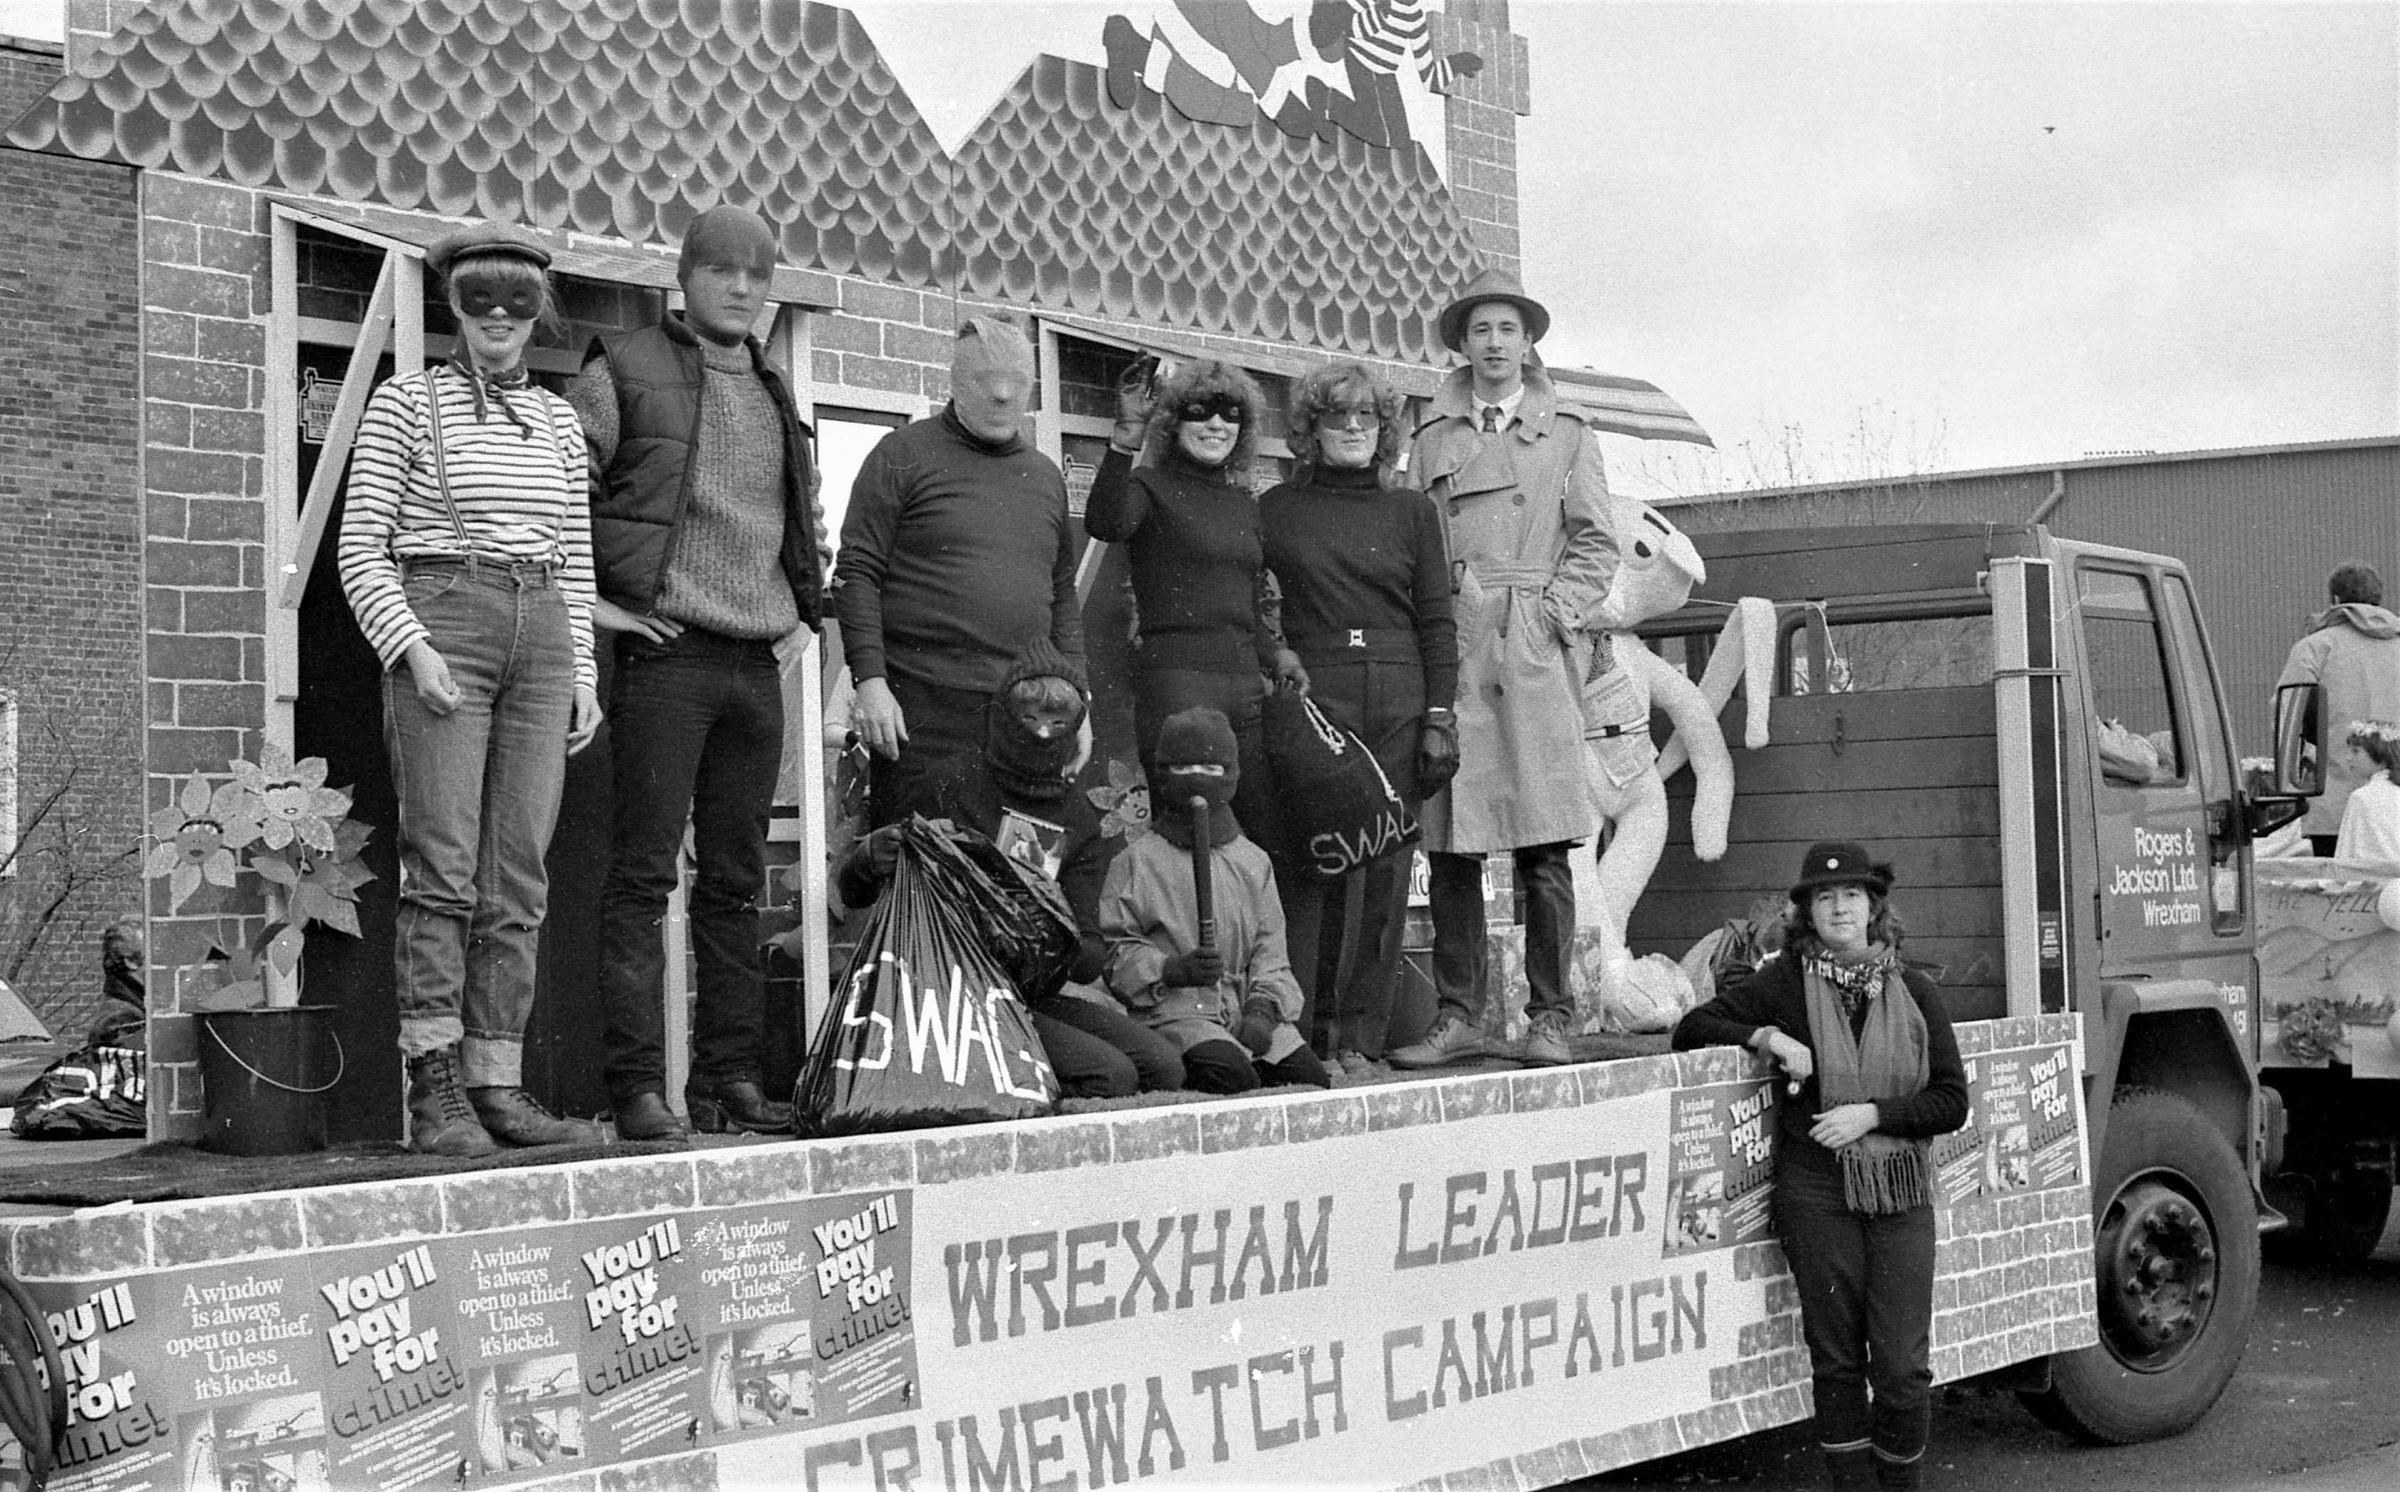 The Father Christmas parade, Wrexham, 1983 - Wrexham Evening Leader float.